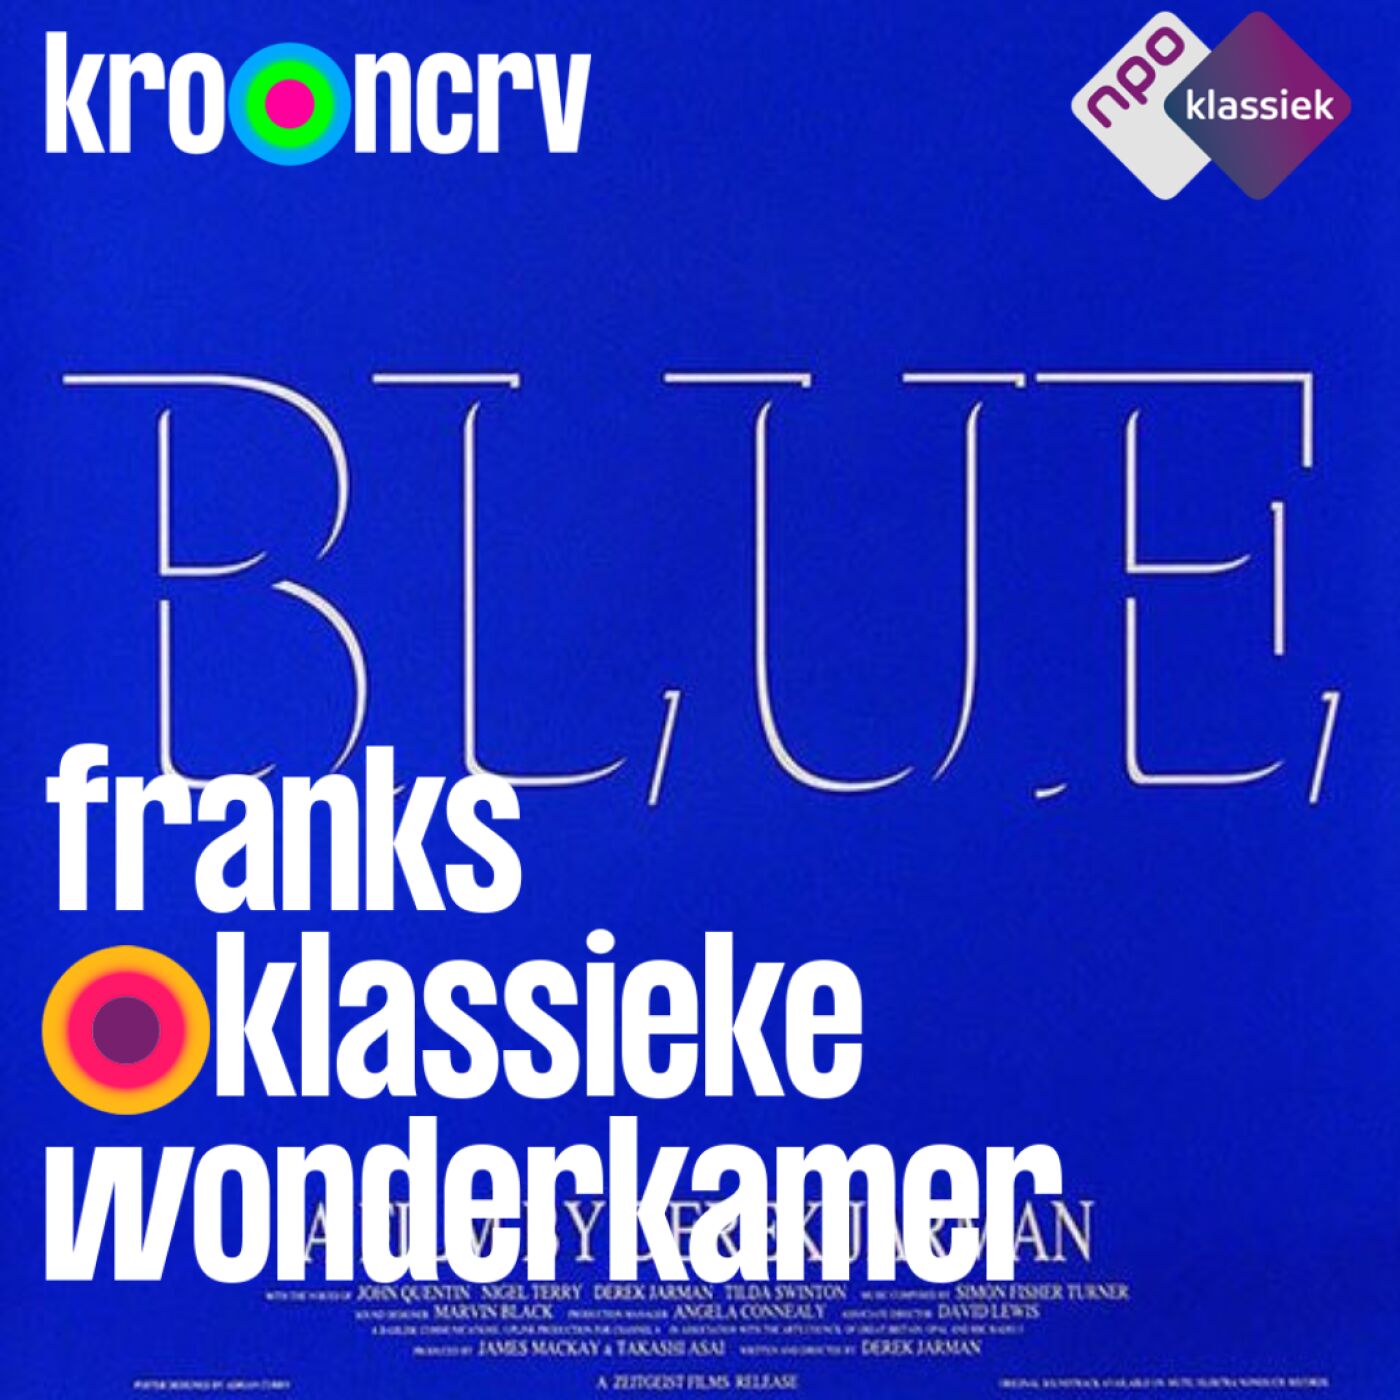 #137 - Franks Klassieke Wonderkamer - ‘Blauw, alles blauw’